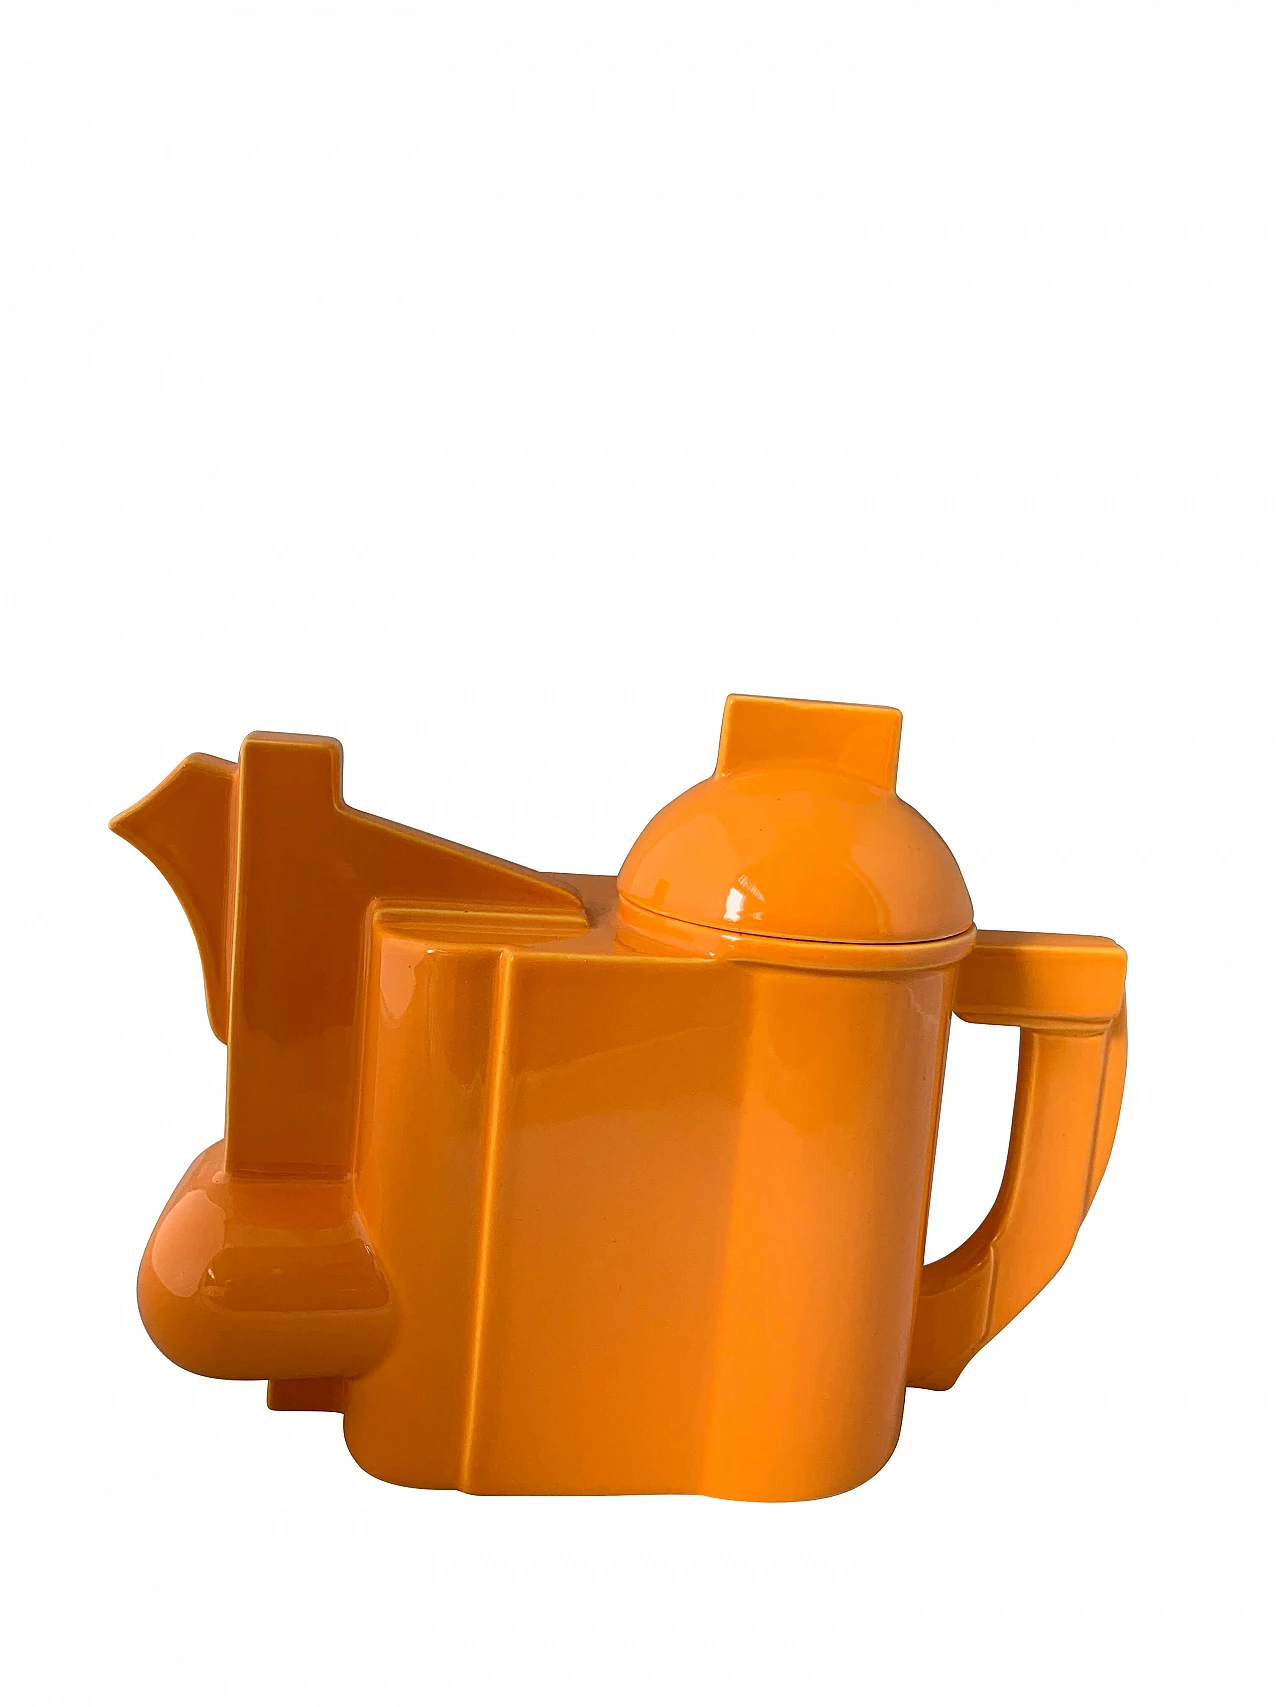 Modernist teapot in orange ceramic by Kazimir Malevich for Cleto Munari, 2000 1092501